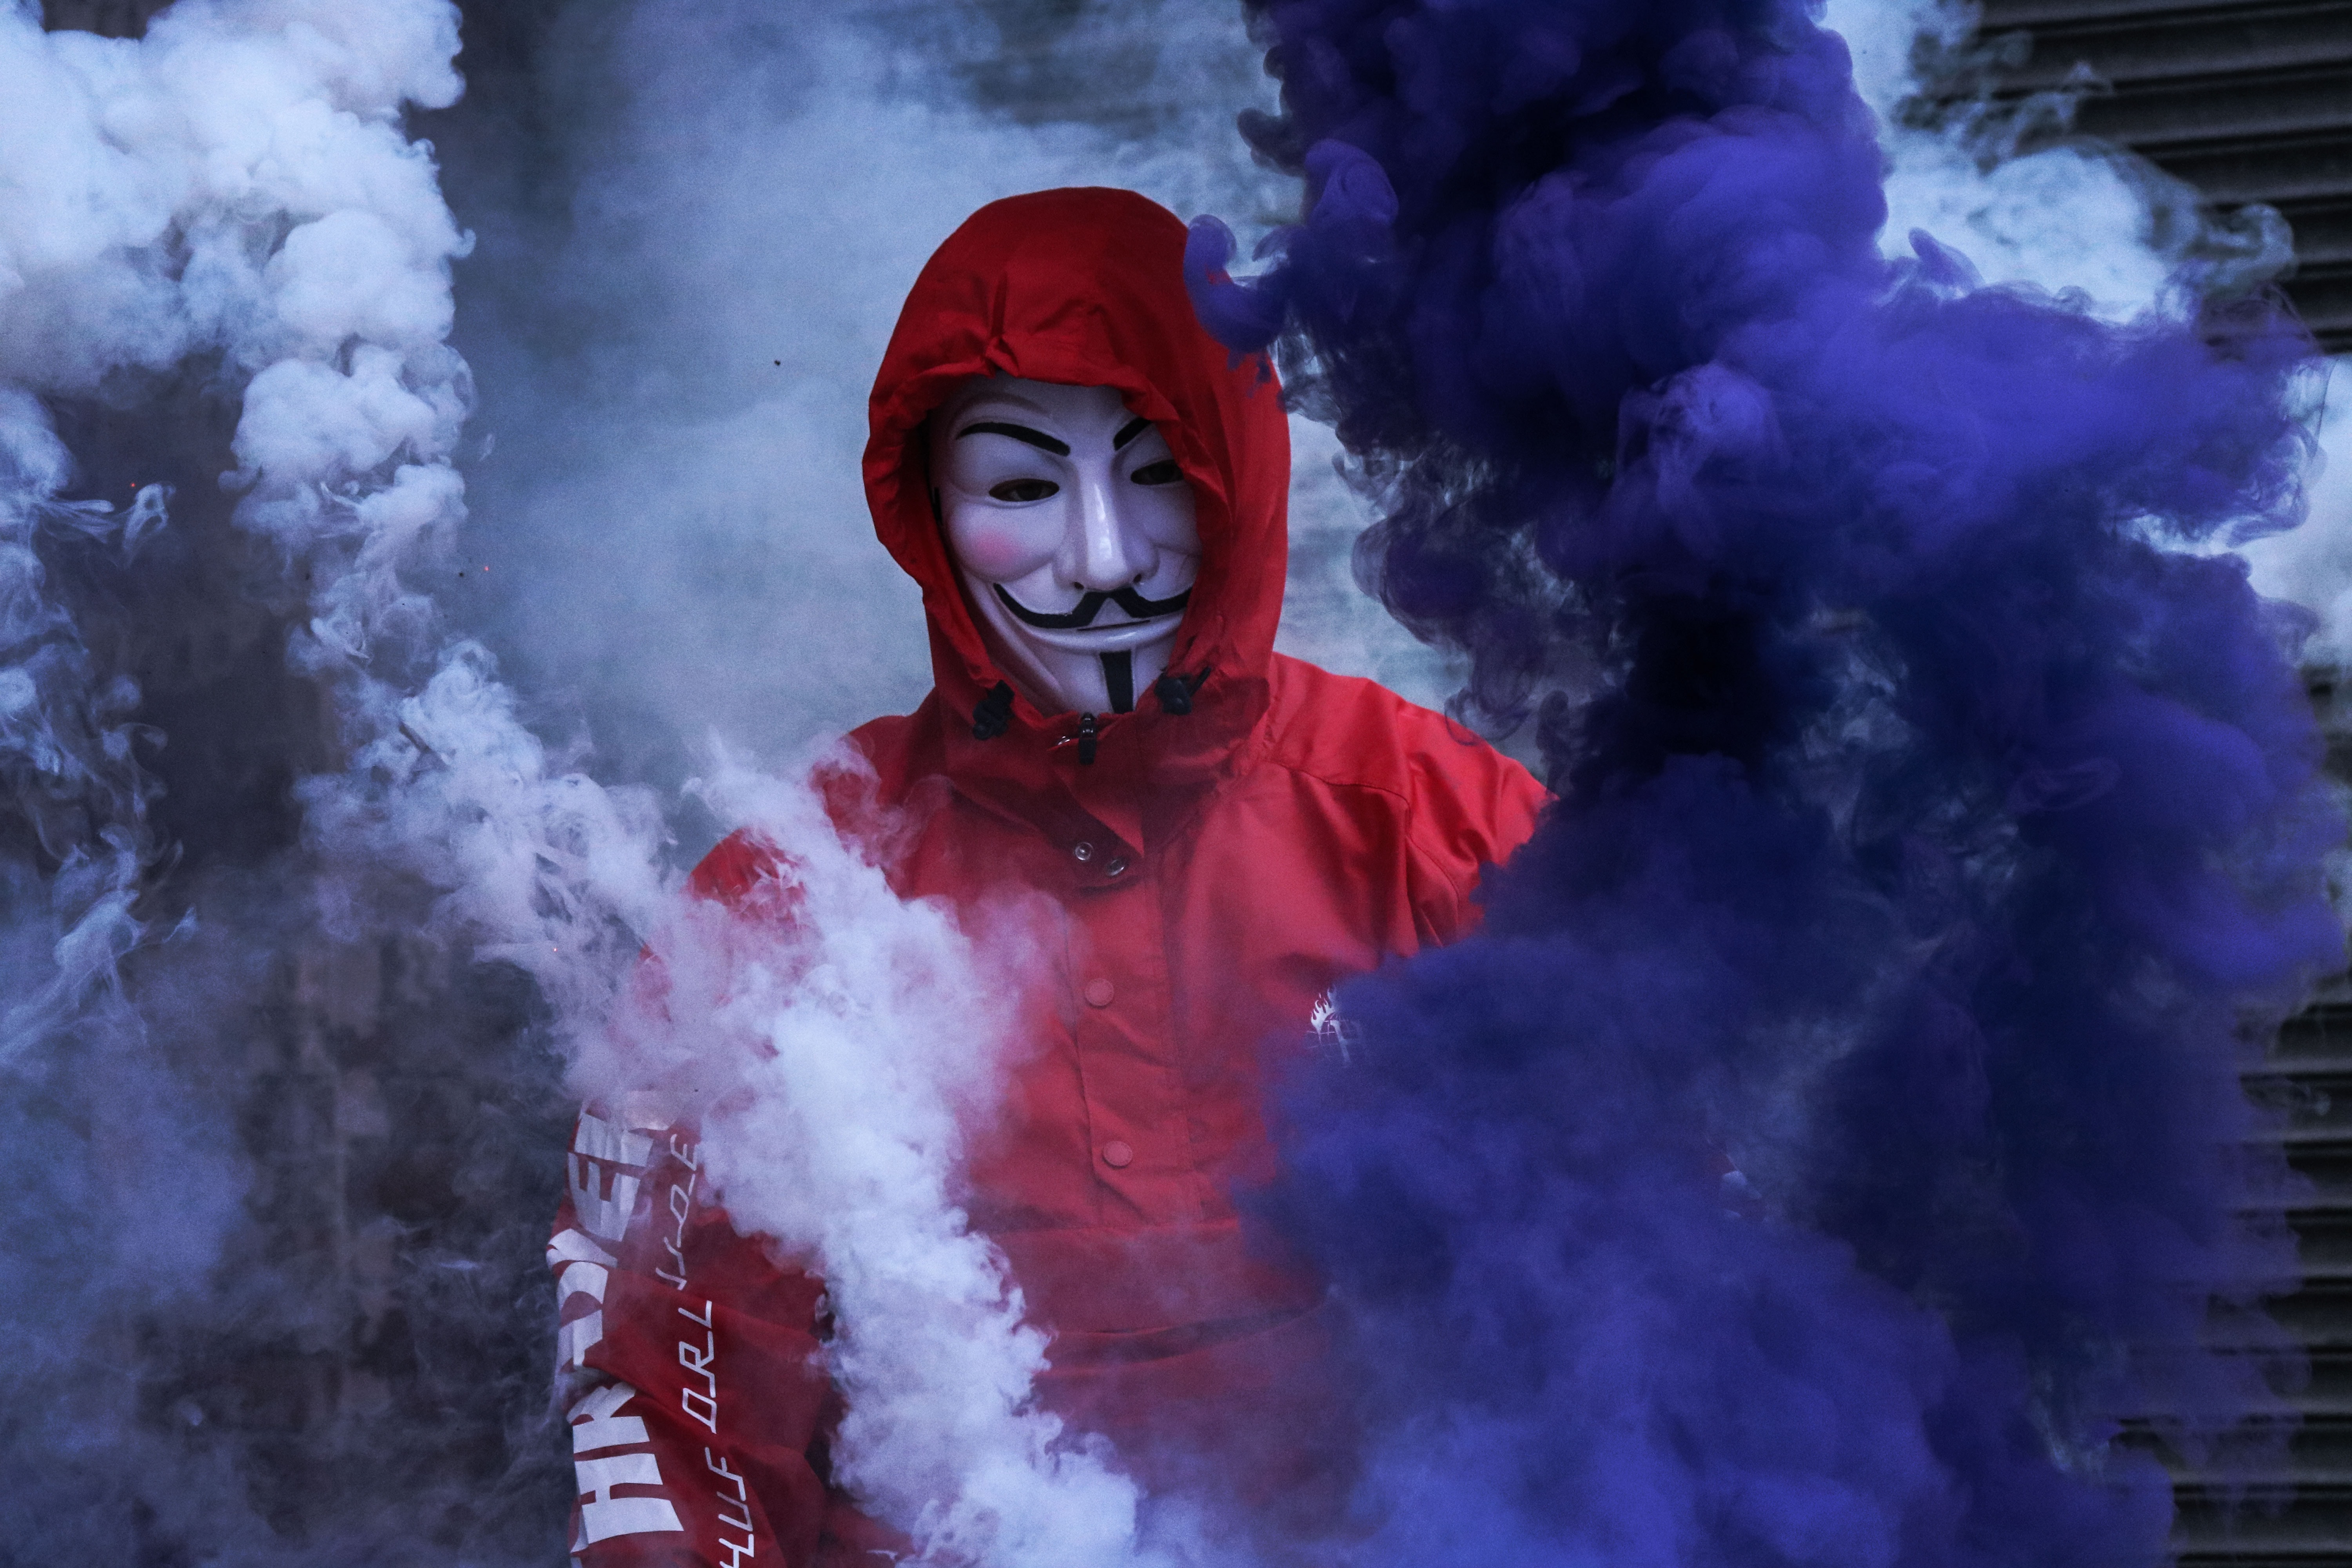 mask, anonymous, smoke bomb, miscellaneous, miscellanea, smoke